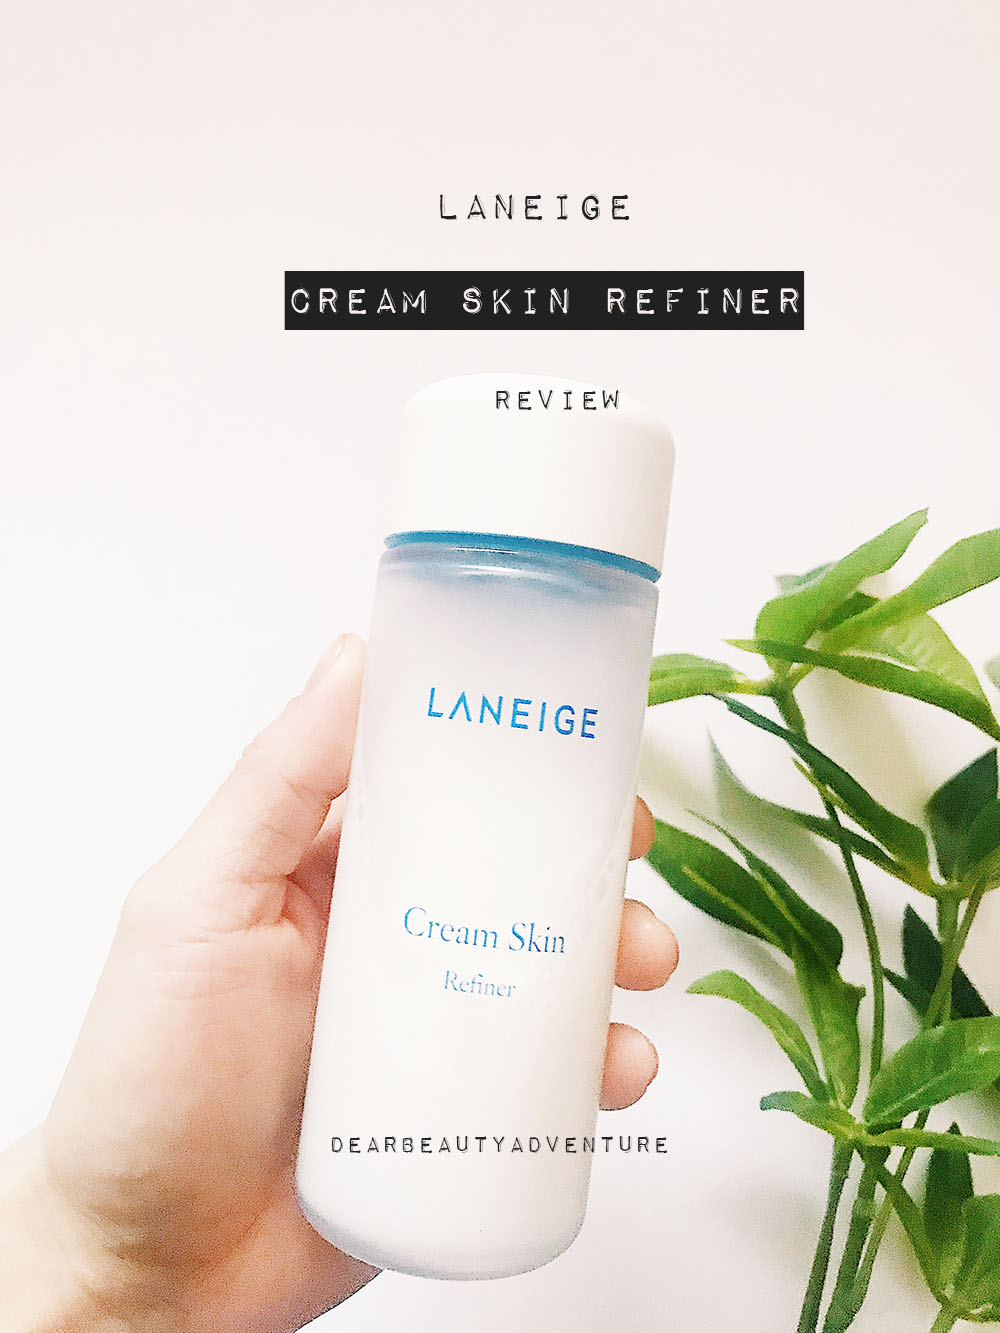 Laneige cream skin review